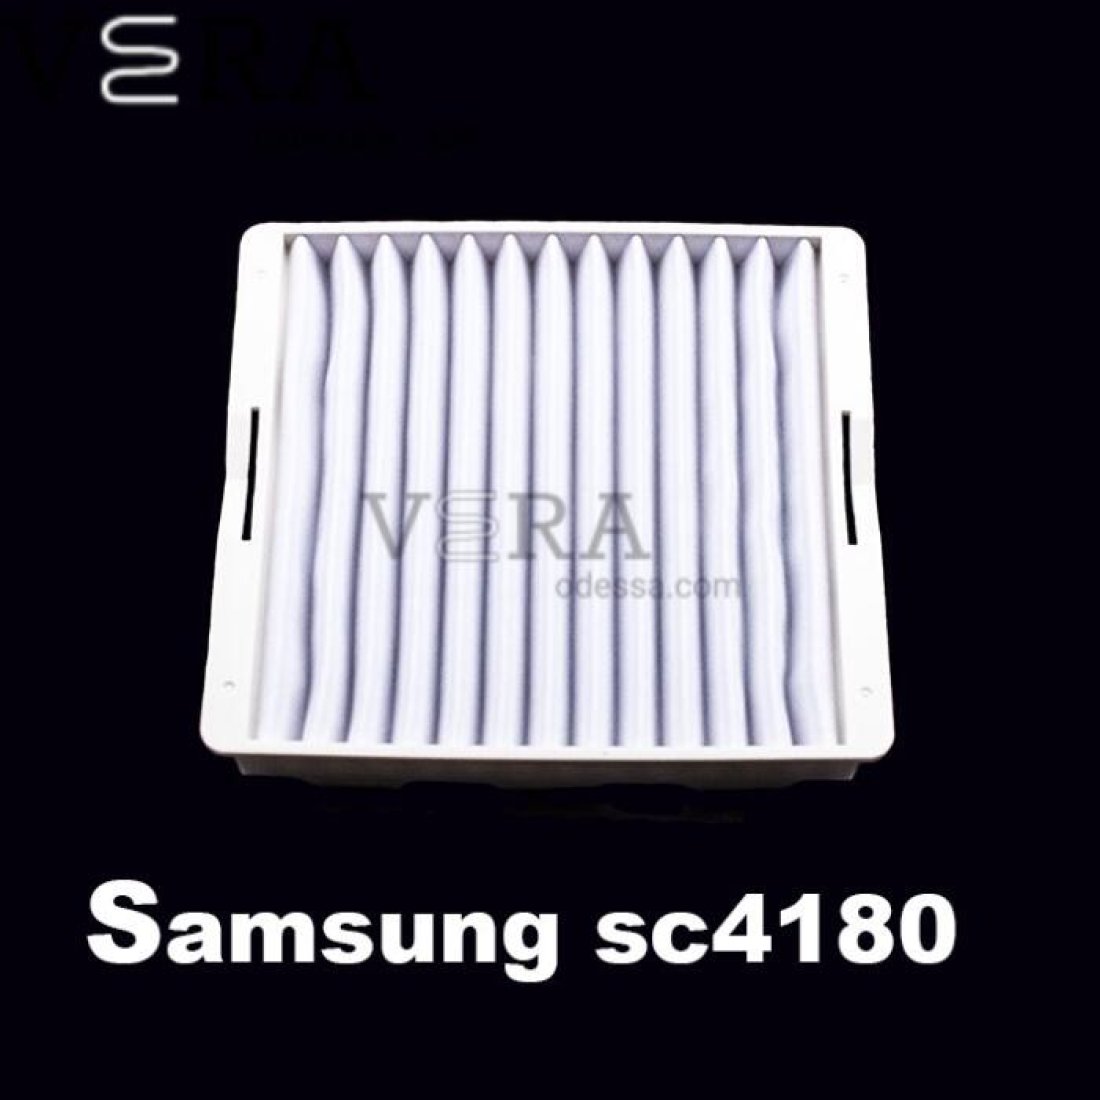 Купити фільтр для пилососу Samsung sc4180 оптом, фотографія 2